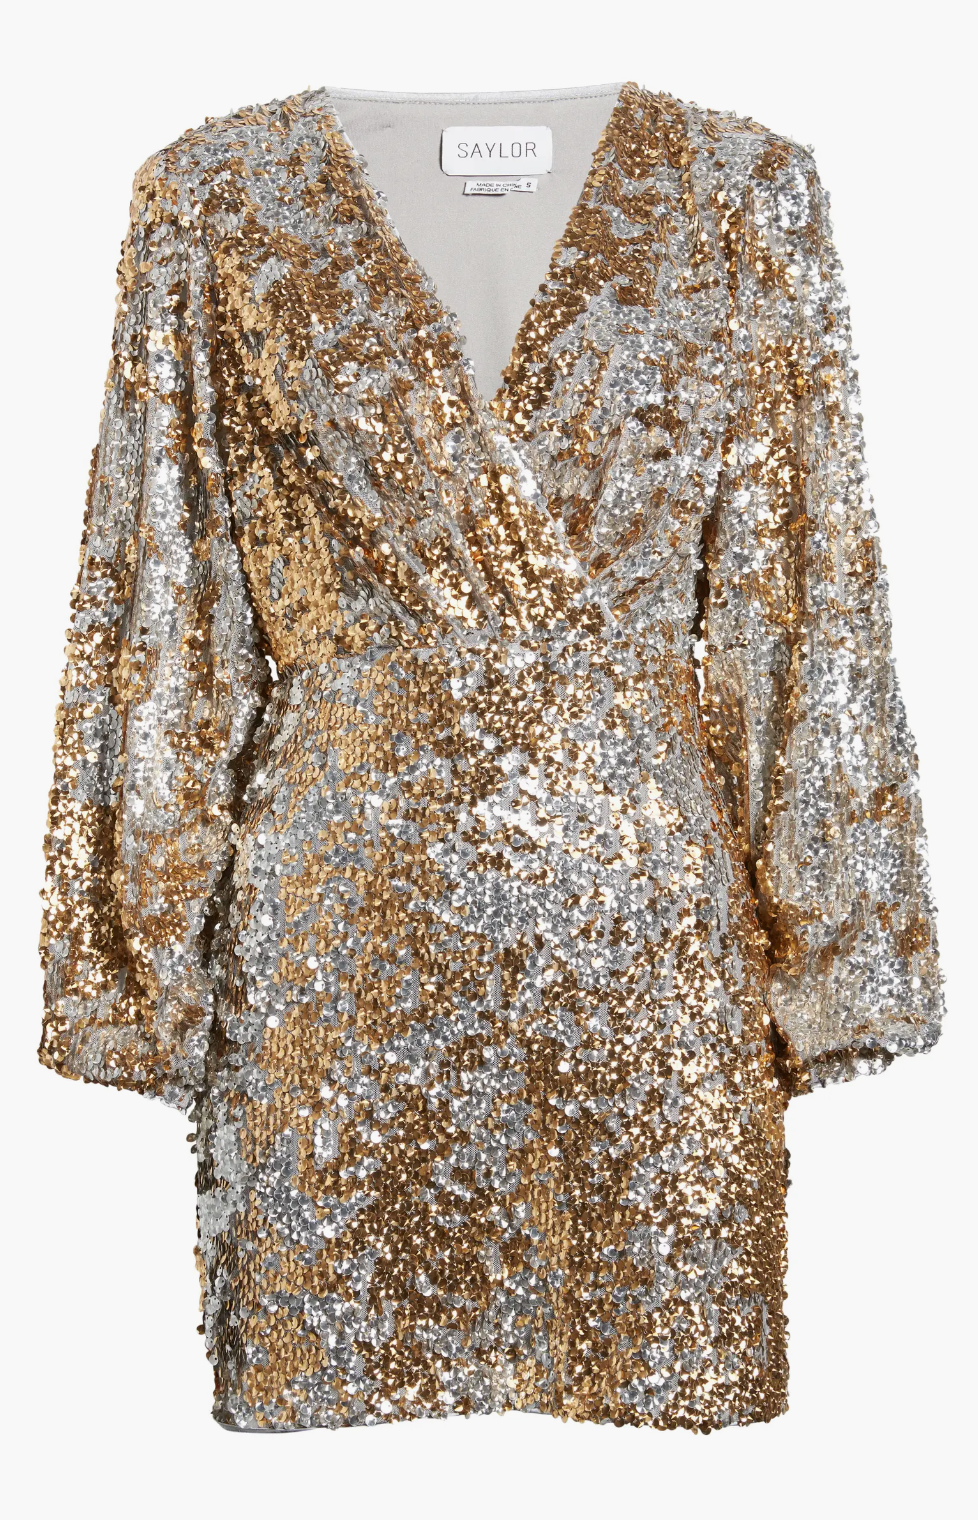 Saylor Rina Sequin Long Sleeve Mini Dress in Silver/Gold